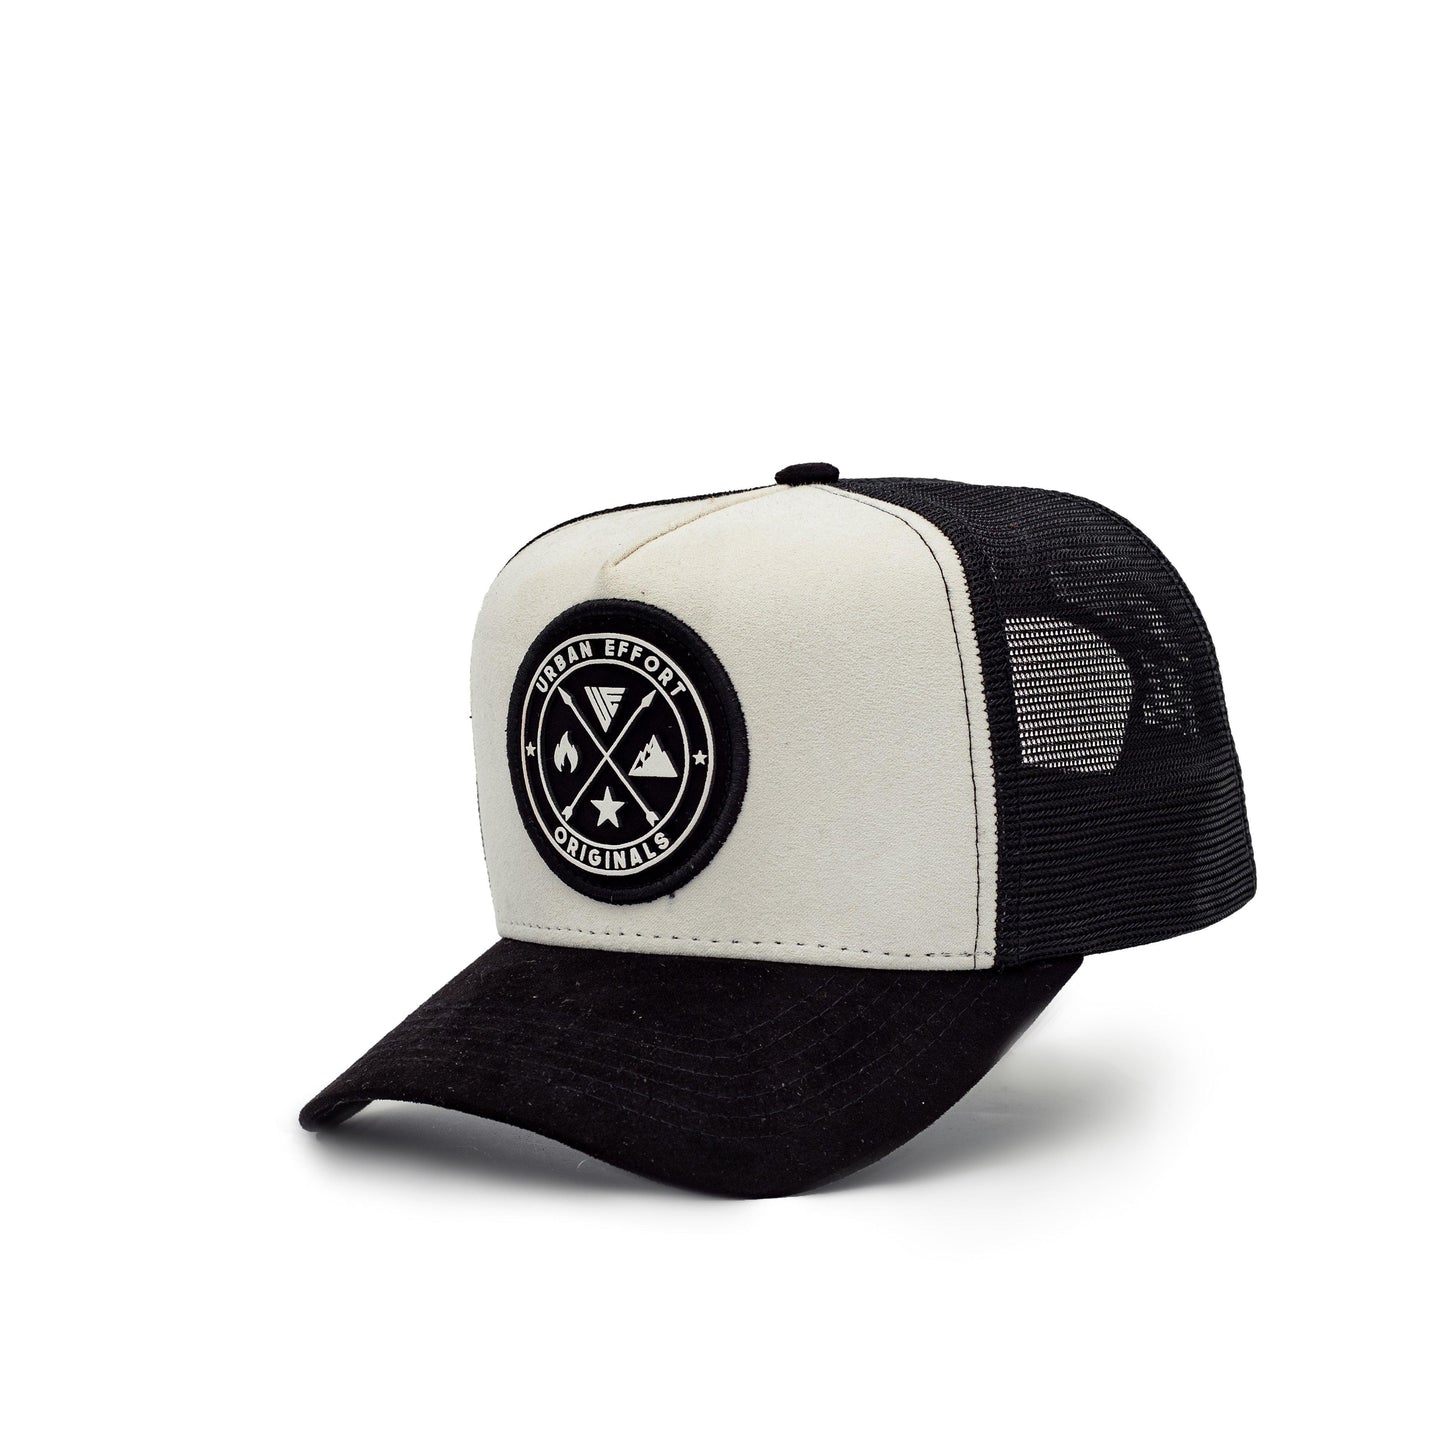 Classic Black & White Trucker Hat | Urban Style | Urban Effort